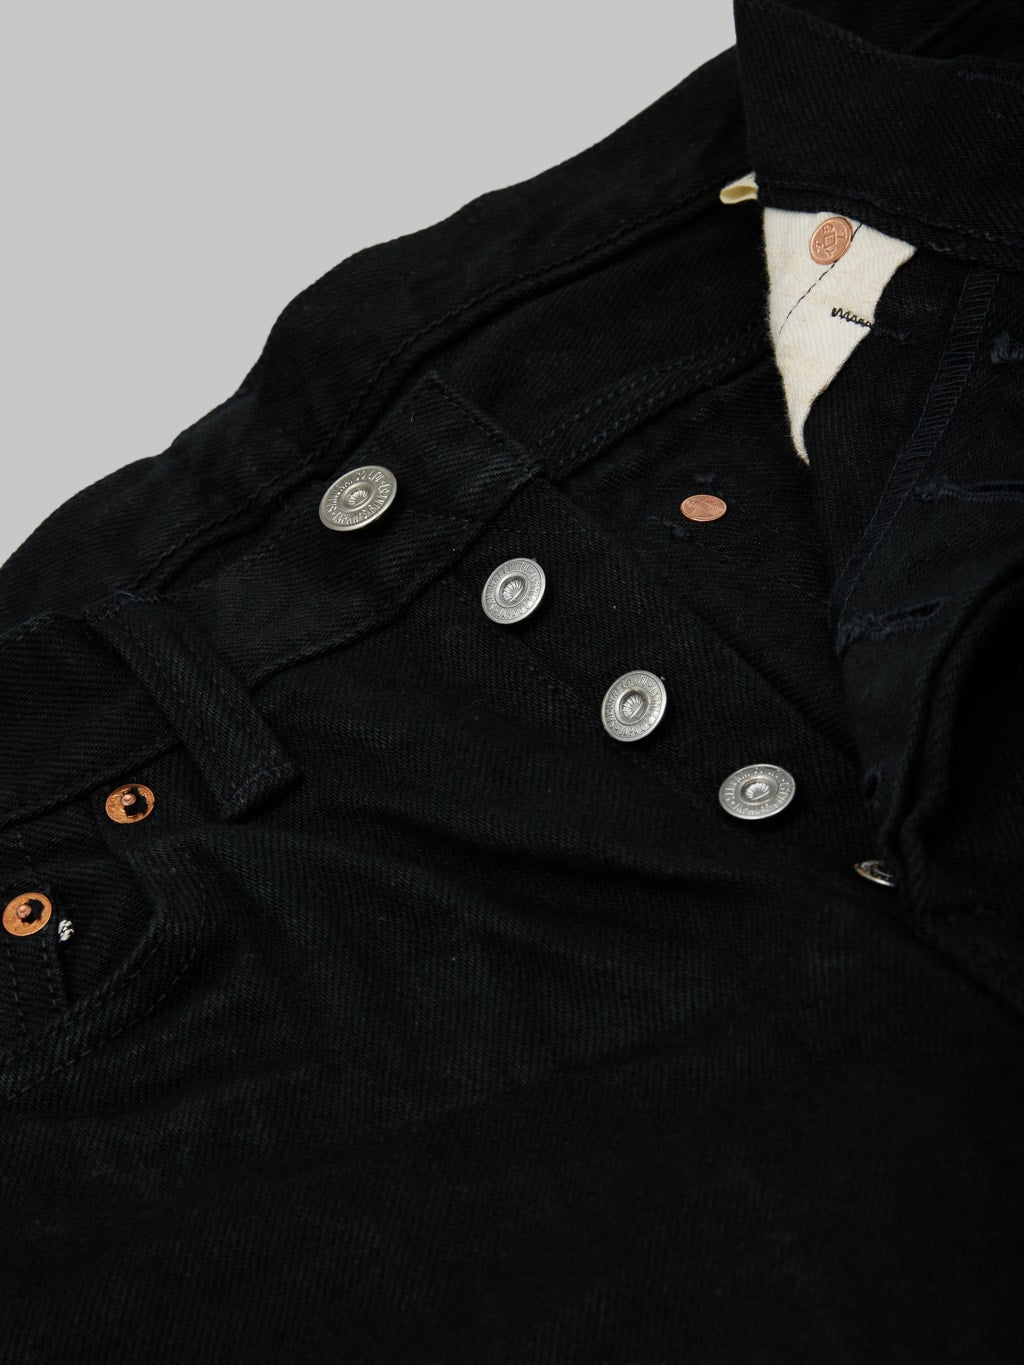 Samurai Jeans Color Fast Black x Black slim straight Jeans iron buttons